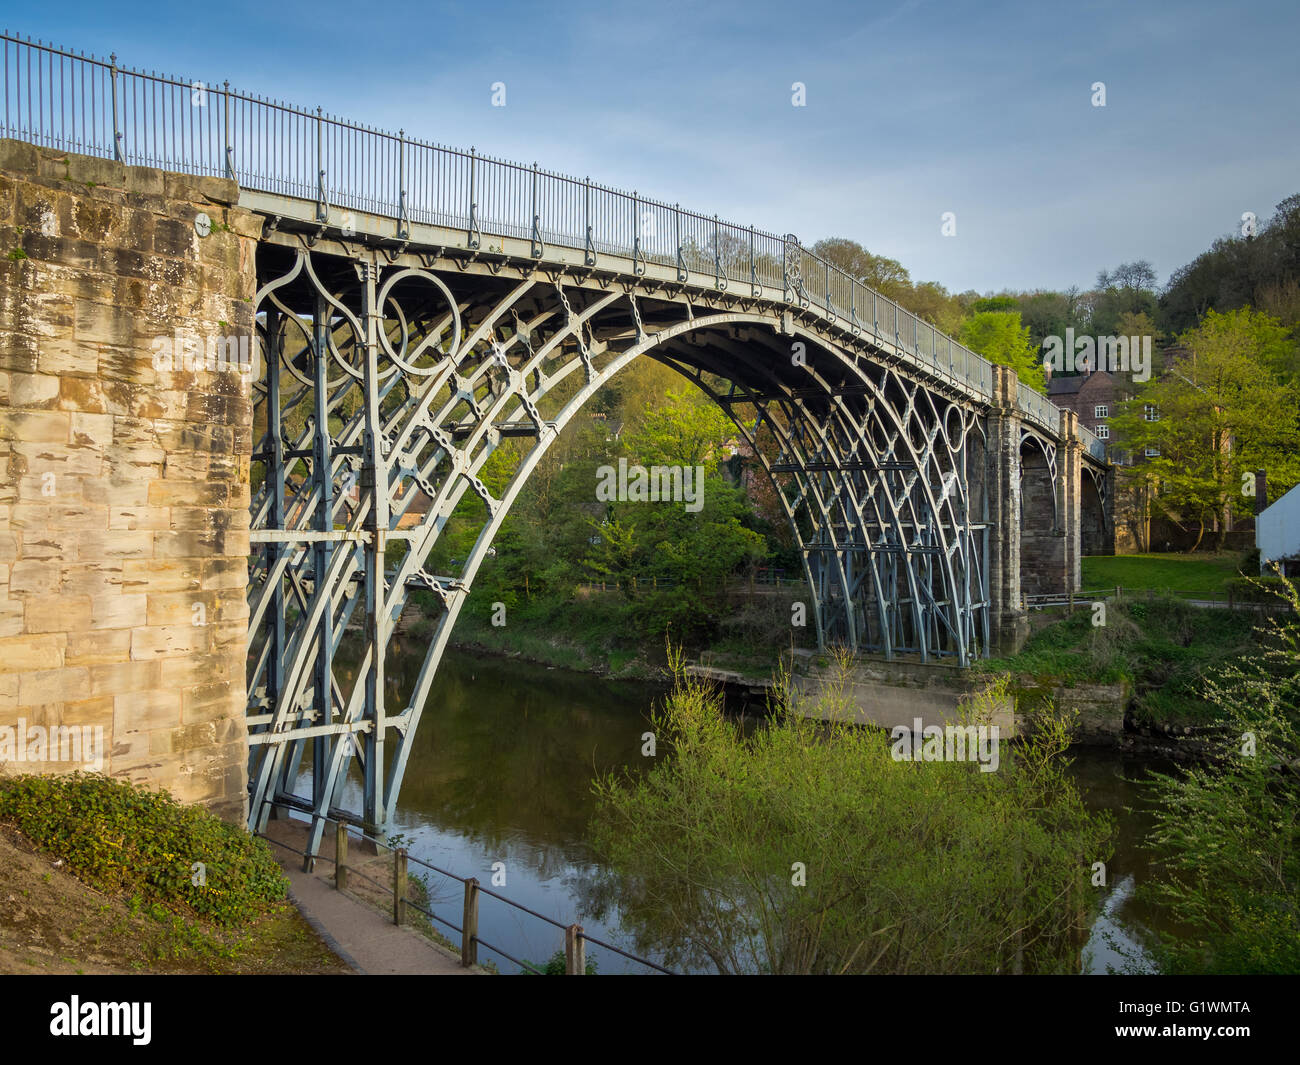 The Iron Bridge Over The River Severn In The Ironbridge Gorge Shropshire England Uk A 30 Metre Span Of Cast Iron Stock Photo Alamy